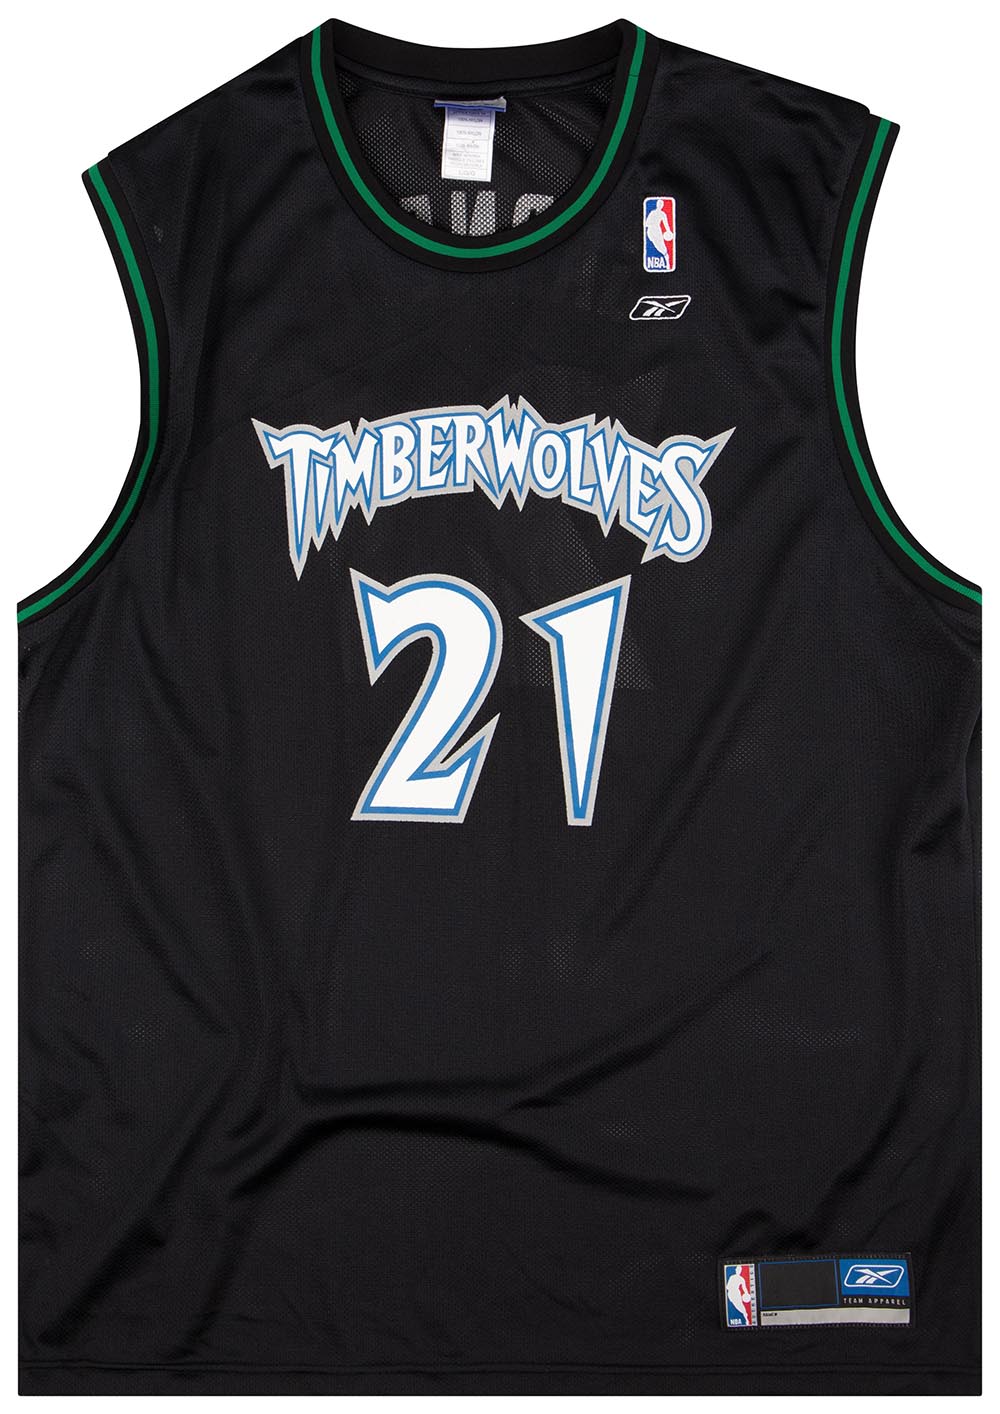 Timberwolves unveil black sleeved alternate jerseys (PHOTOS) - NBC Sports